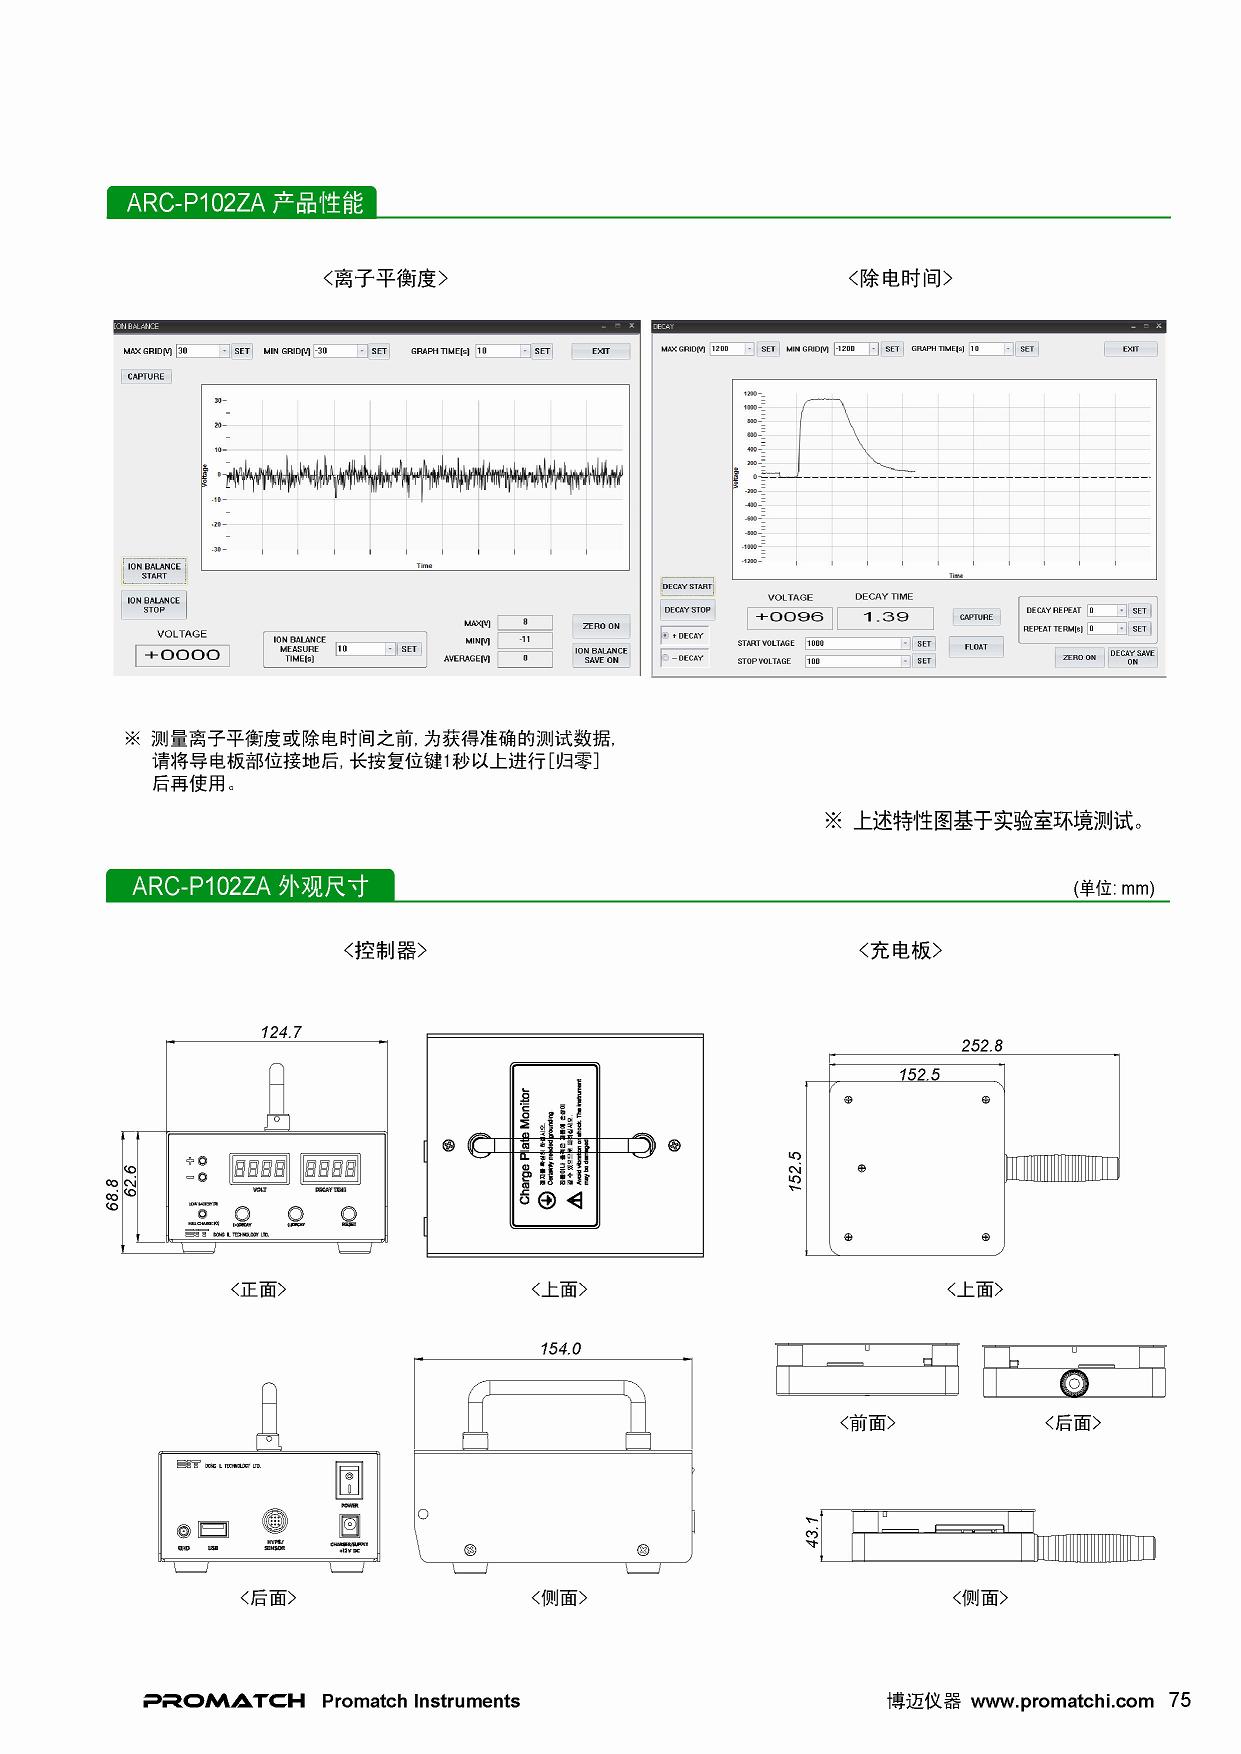 DIT,韩国东日技研,除电性能测试仪,ARC-P102ZA